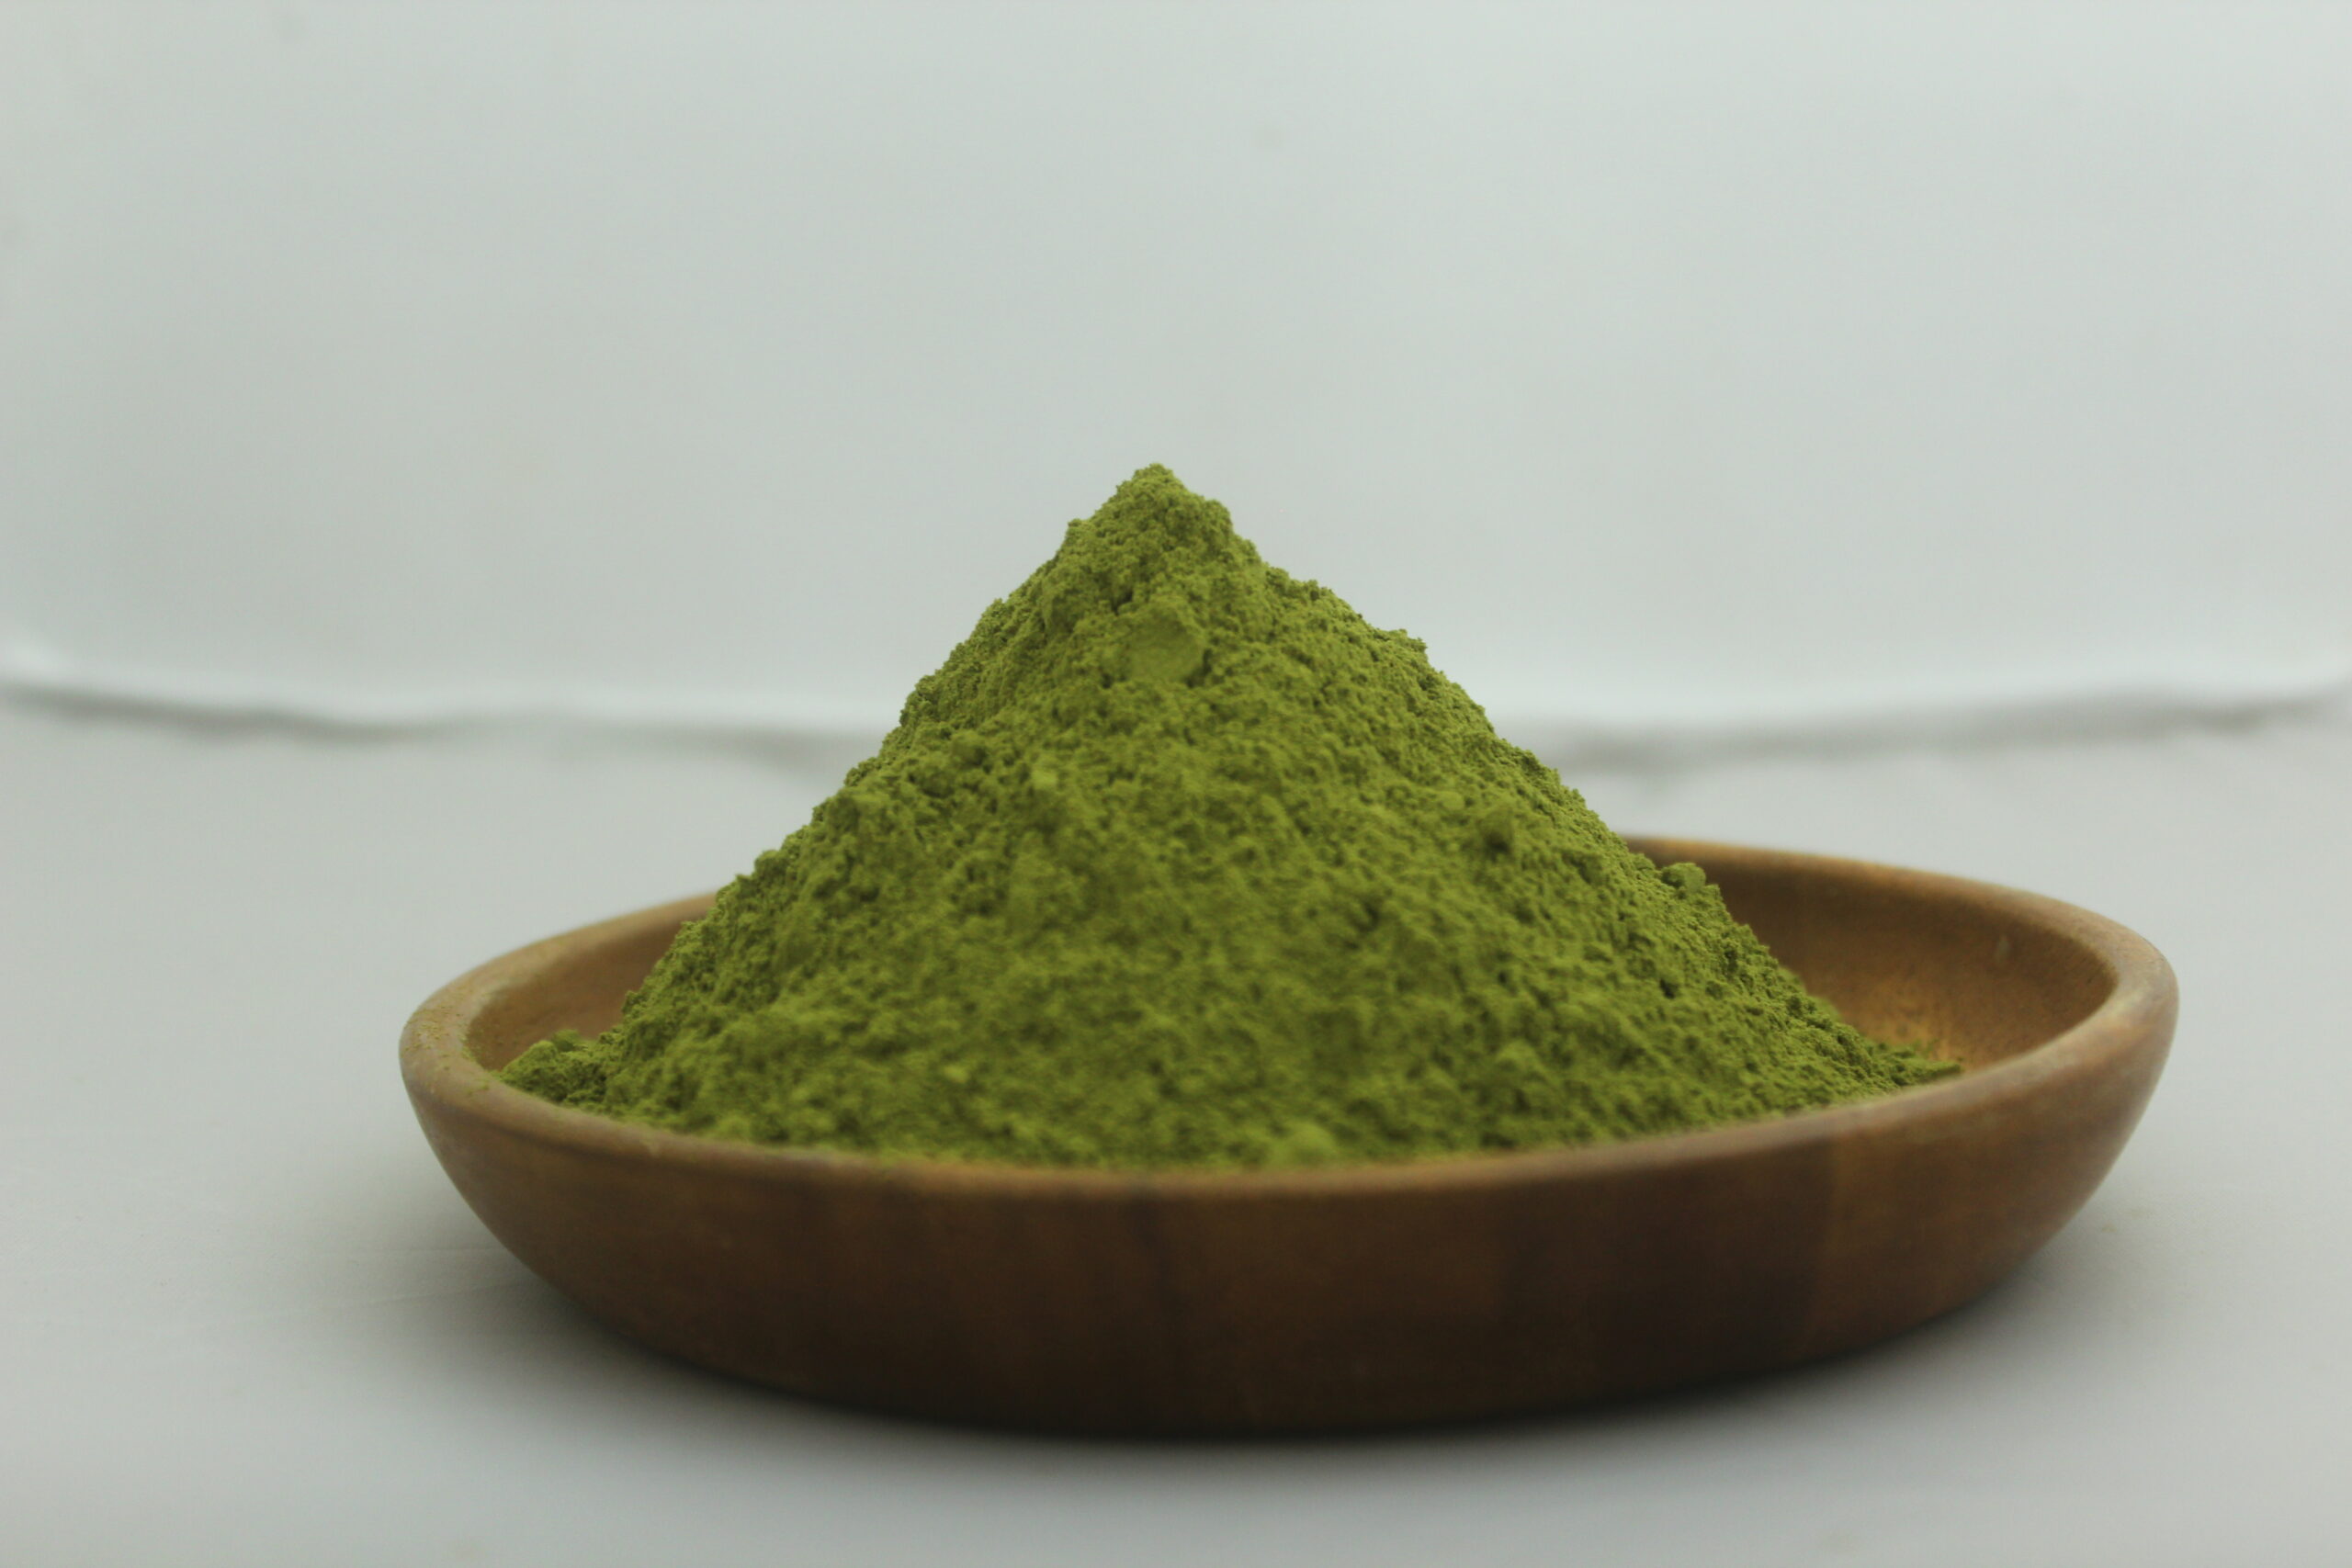 Moringa leaf powder in a bowl